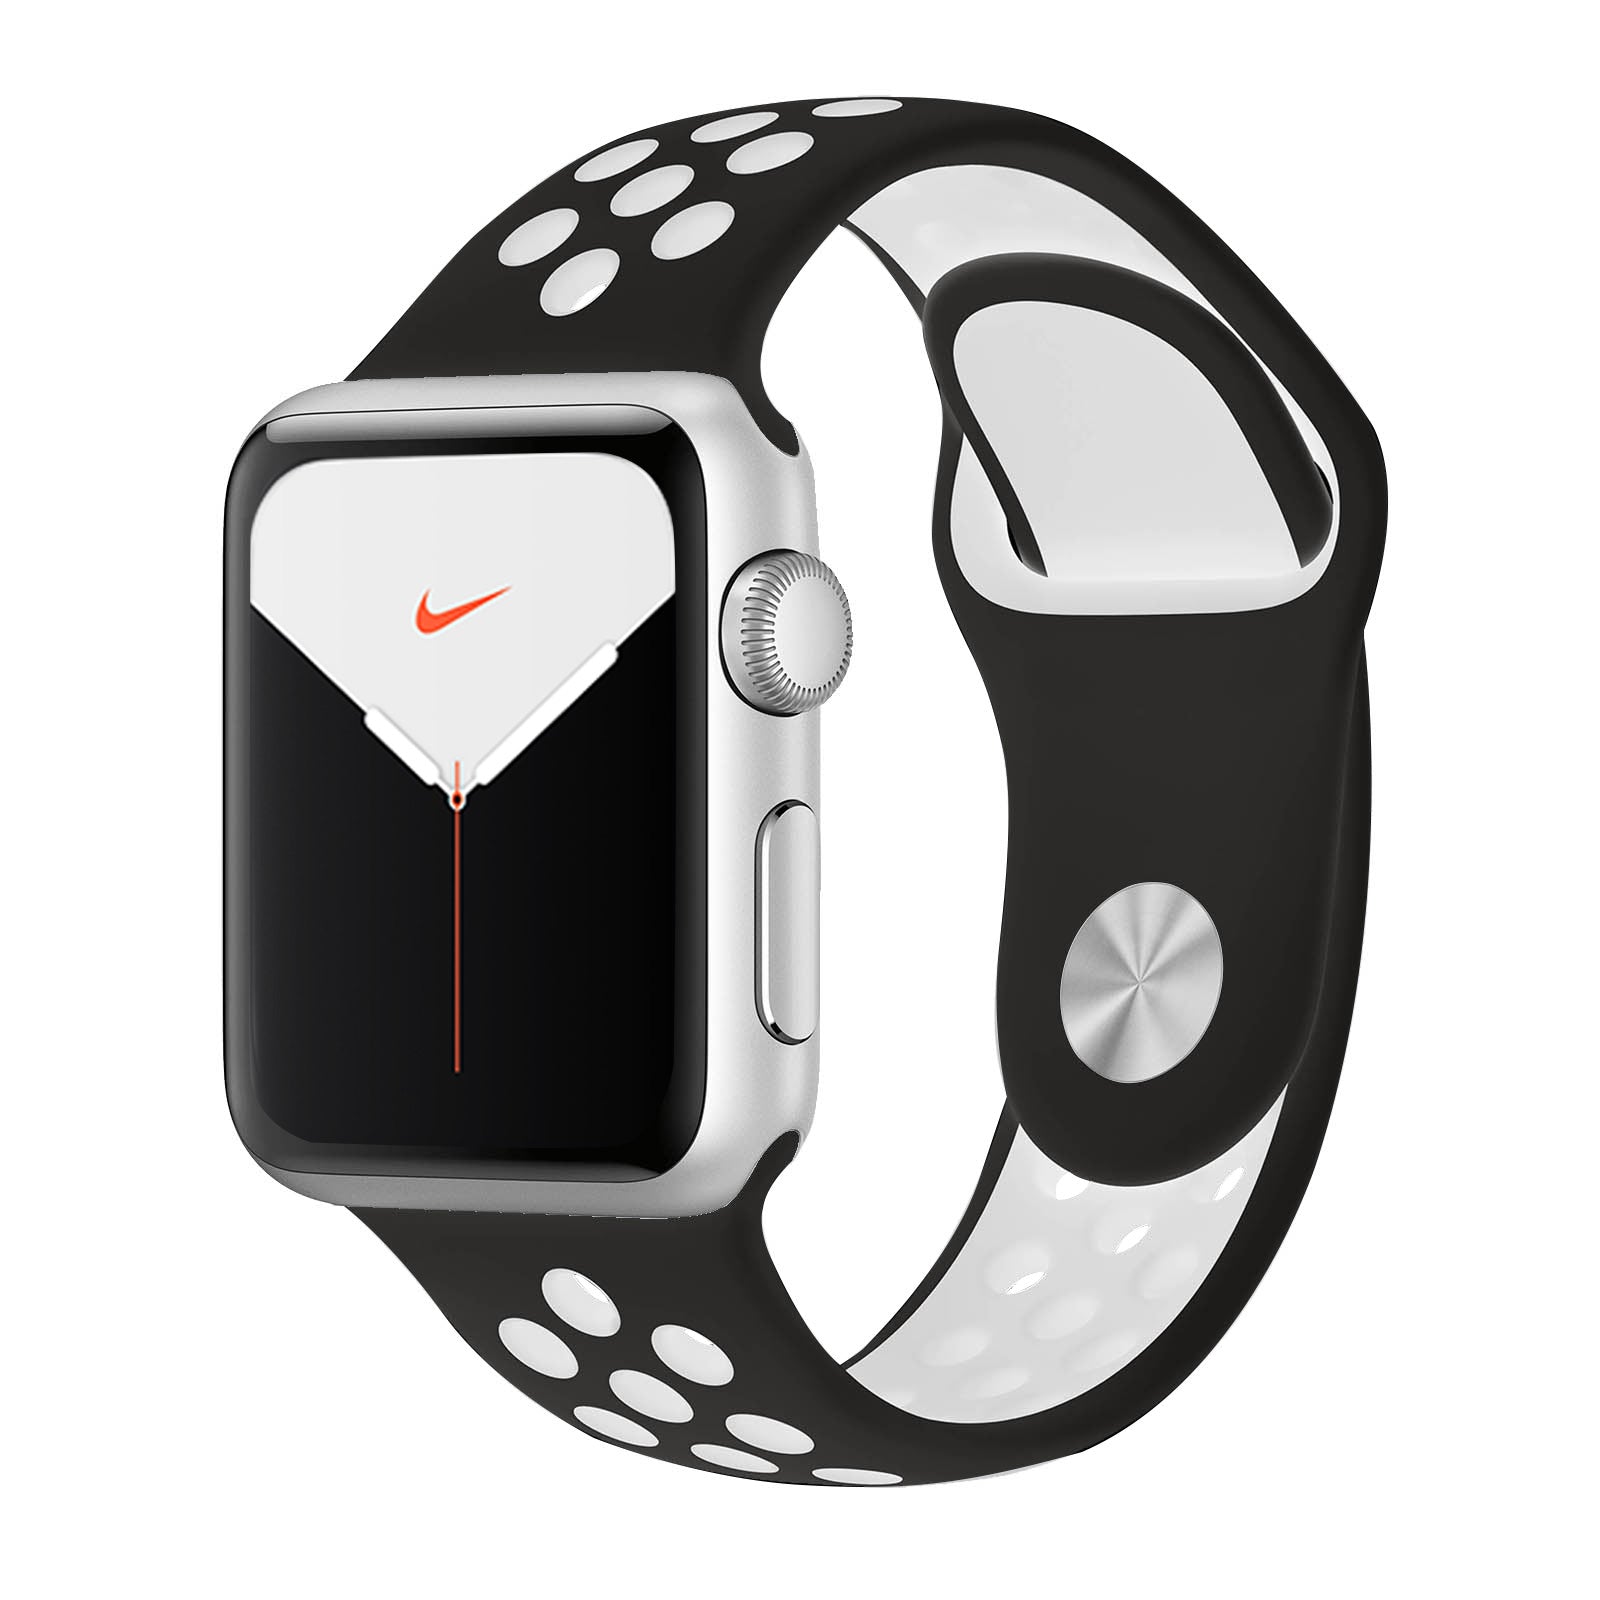 Apple Watch Series 5 Nike Aluminium 40mm Silver Pristine - WiFi